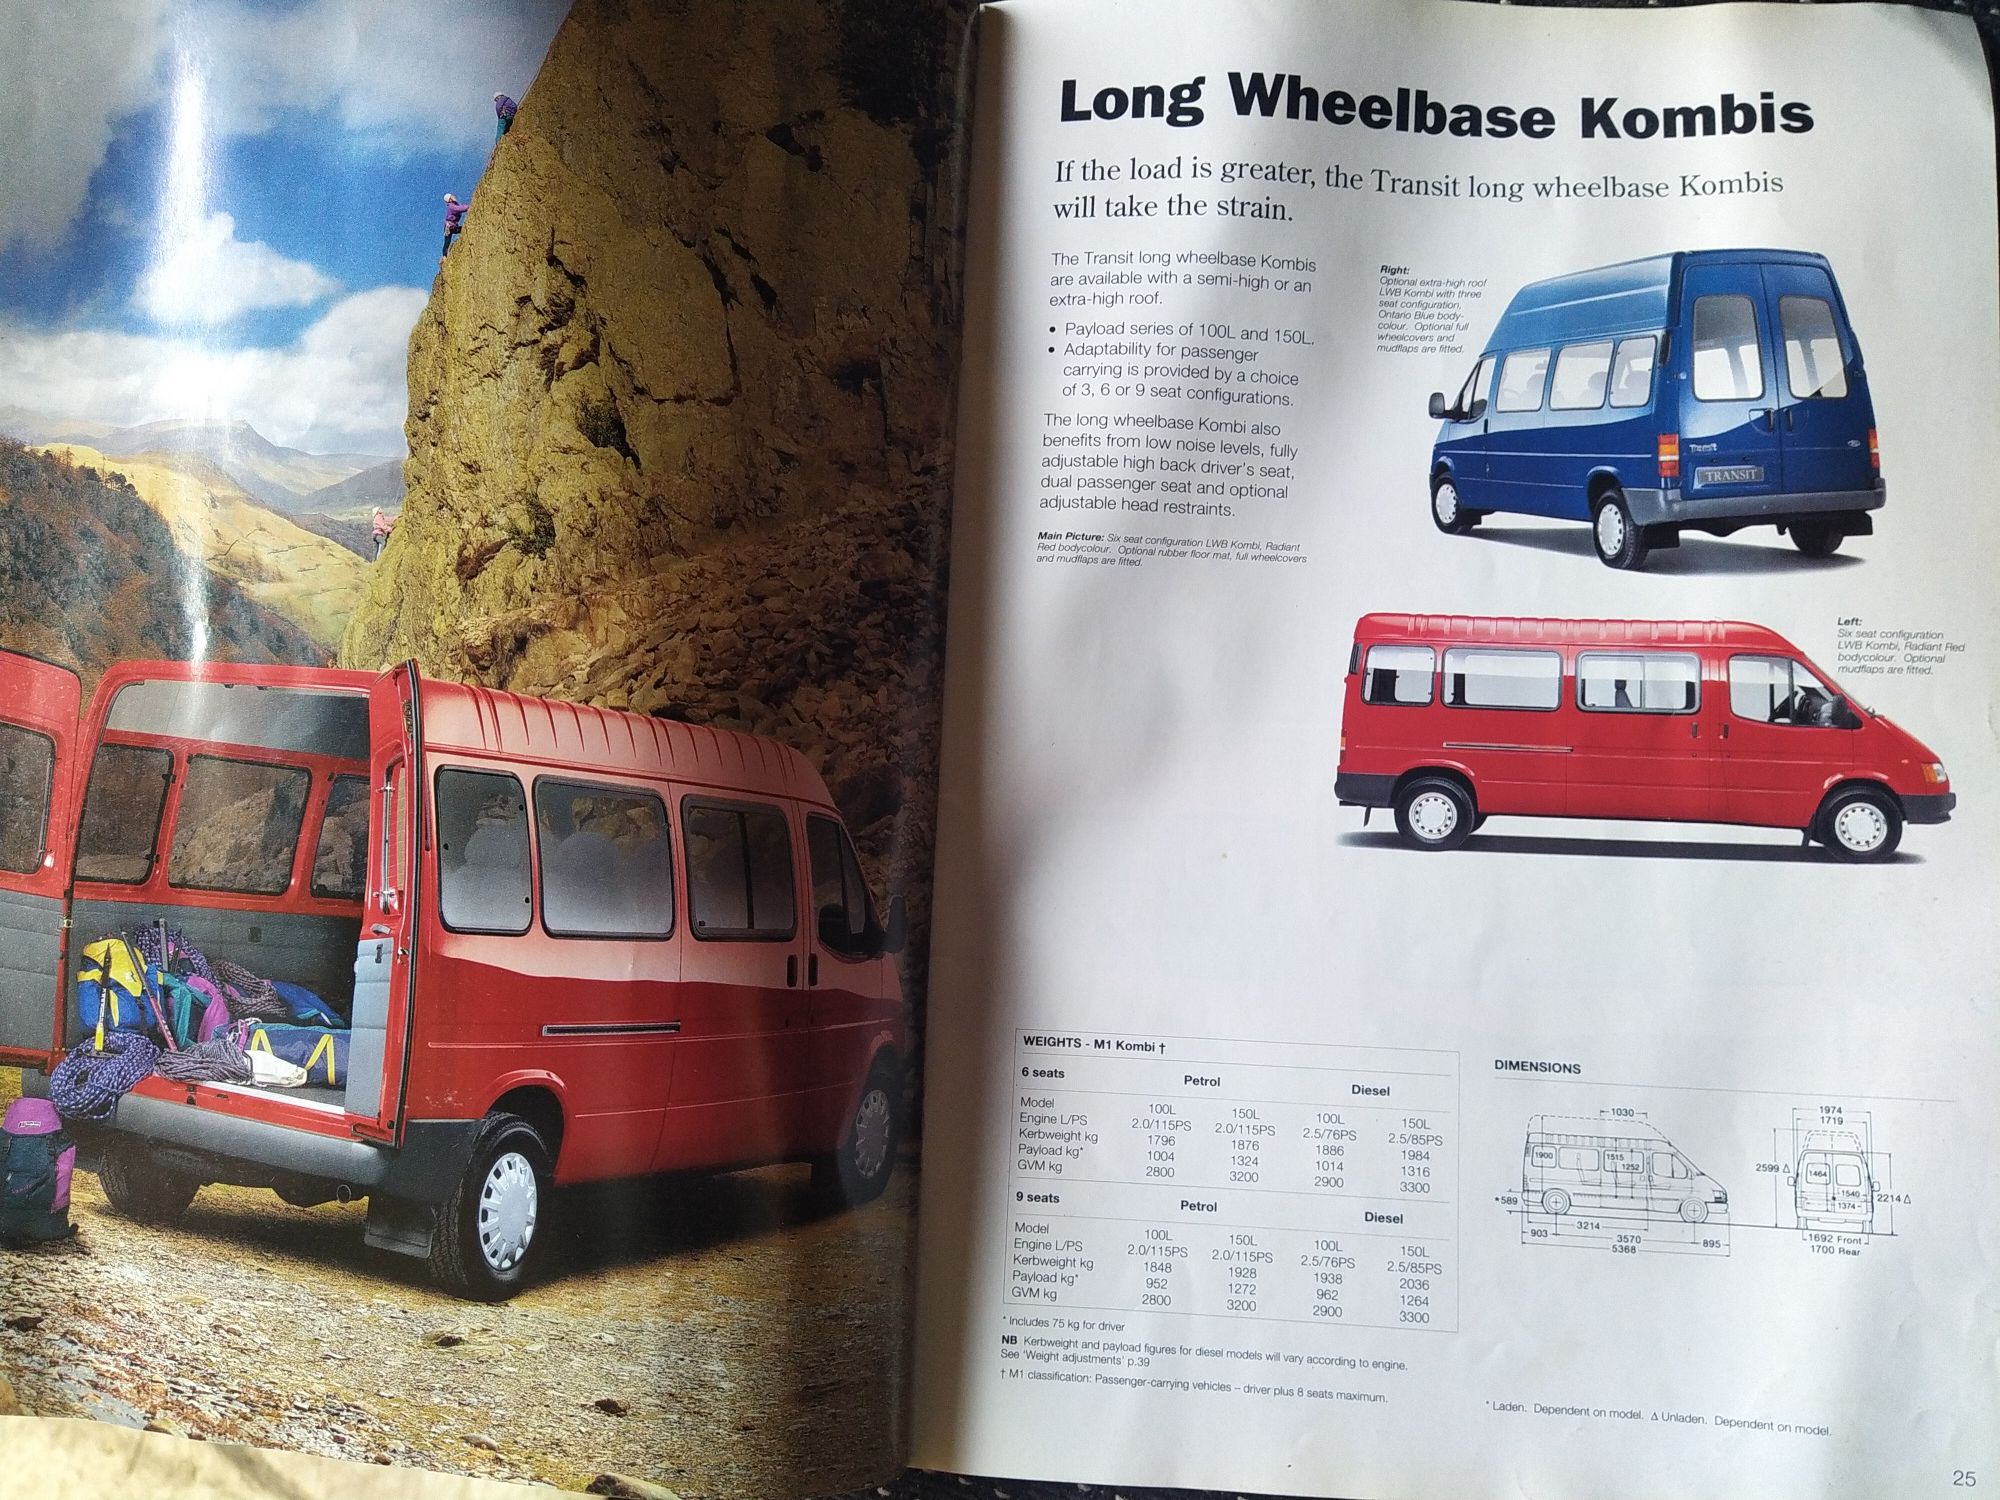 Журнал Ford Transit рекламный проспект  Форд транзит  mk5 1995 фирменн